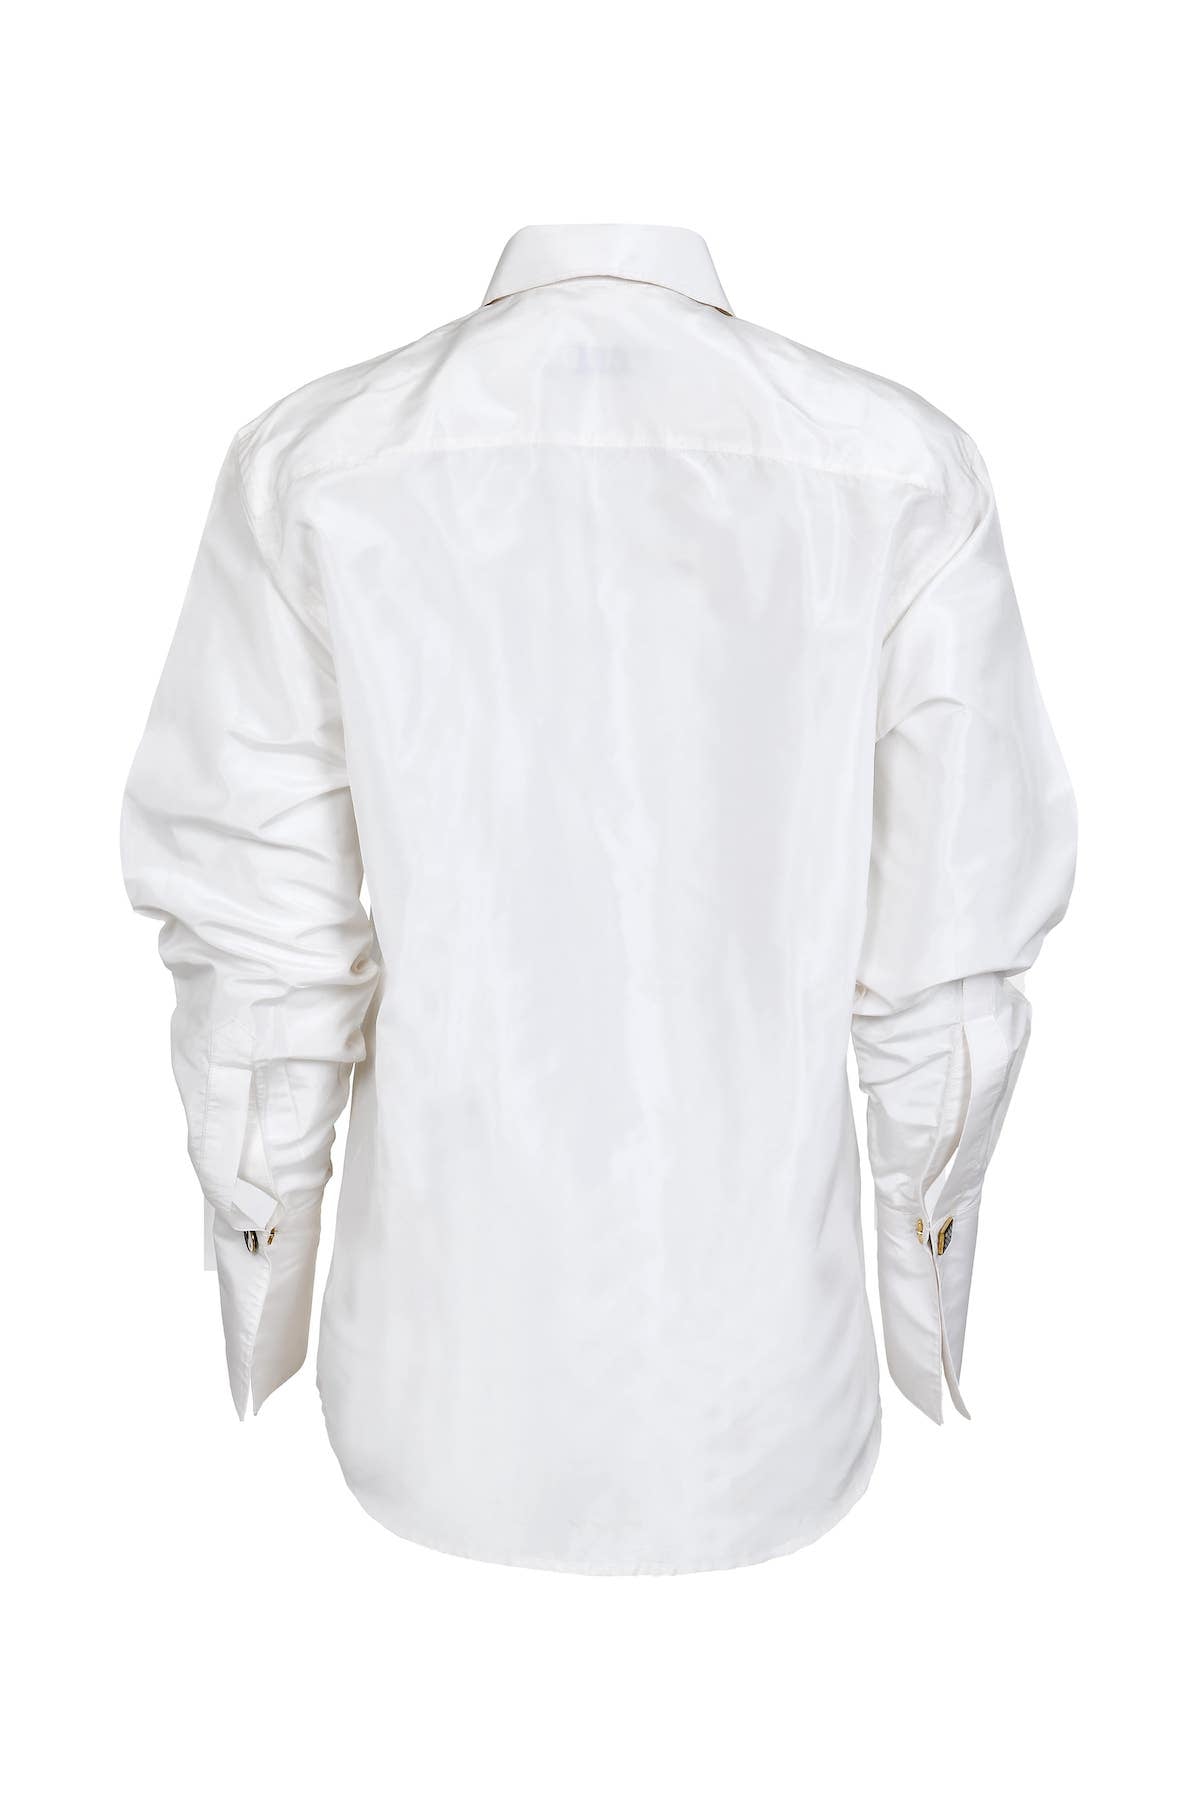 The Classic Tuxedo Shirt 100% Silk Taffeta